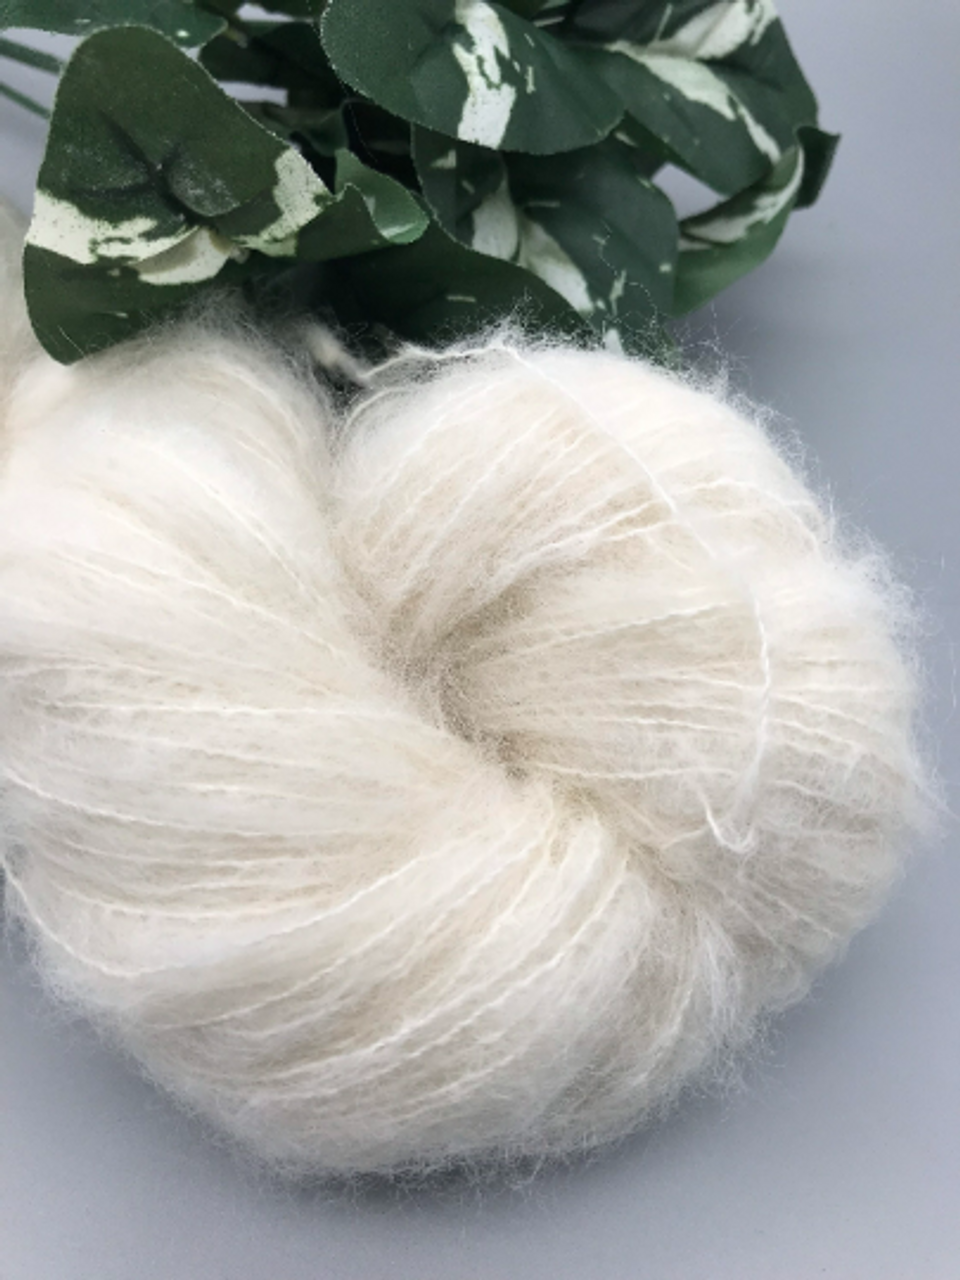 Product Details, Kiku - 100% Bombyx Spun Silk Yarn, 20/2, lace weight (on  cones), Natural (Undyed), Yarns - Undyed